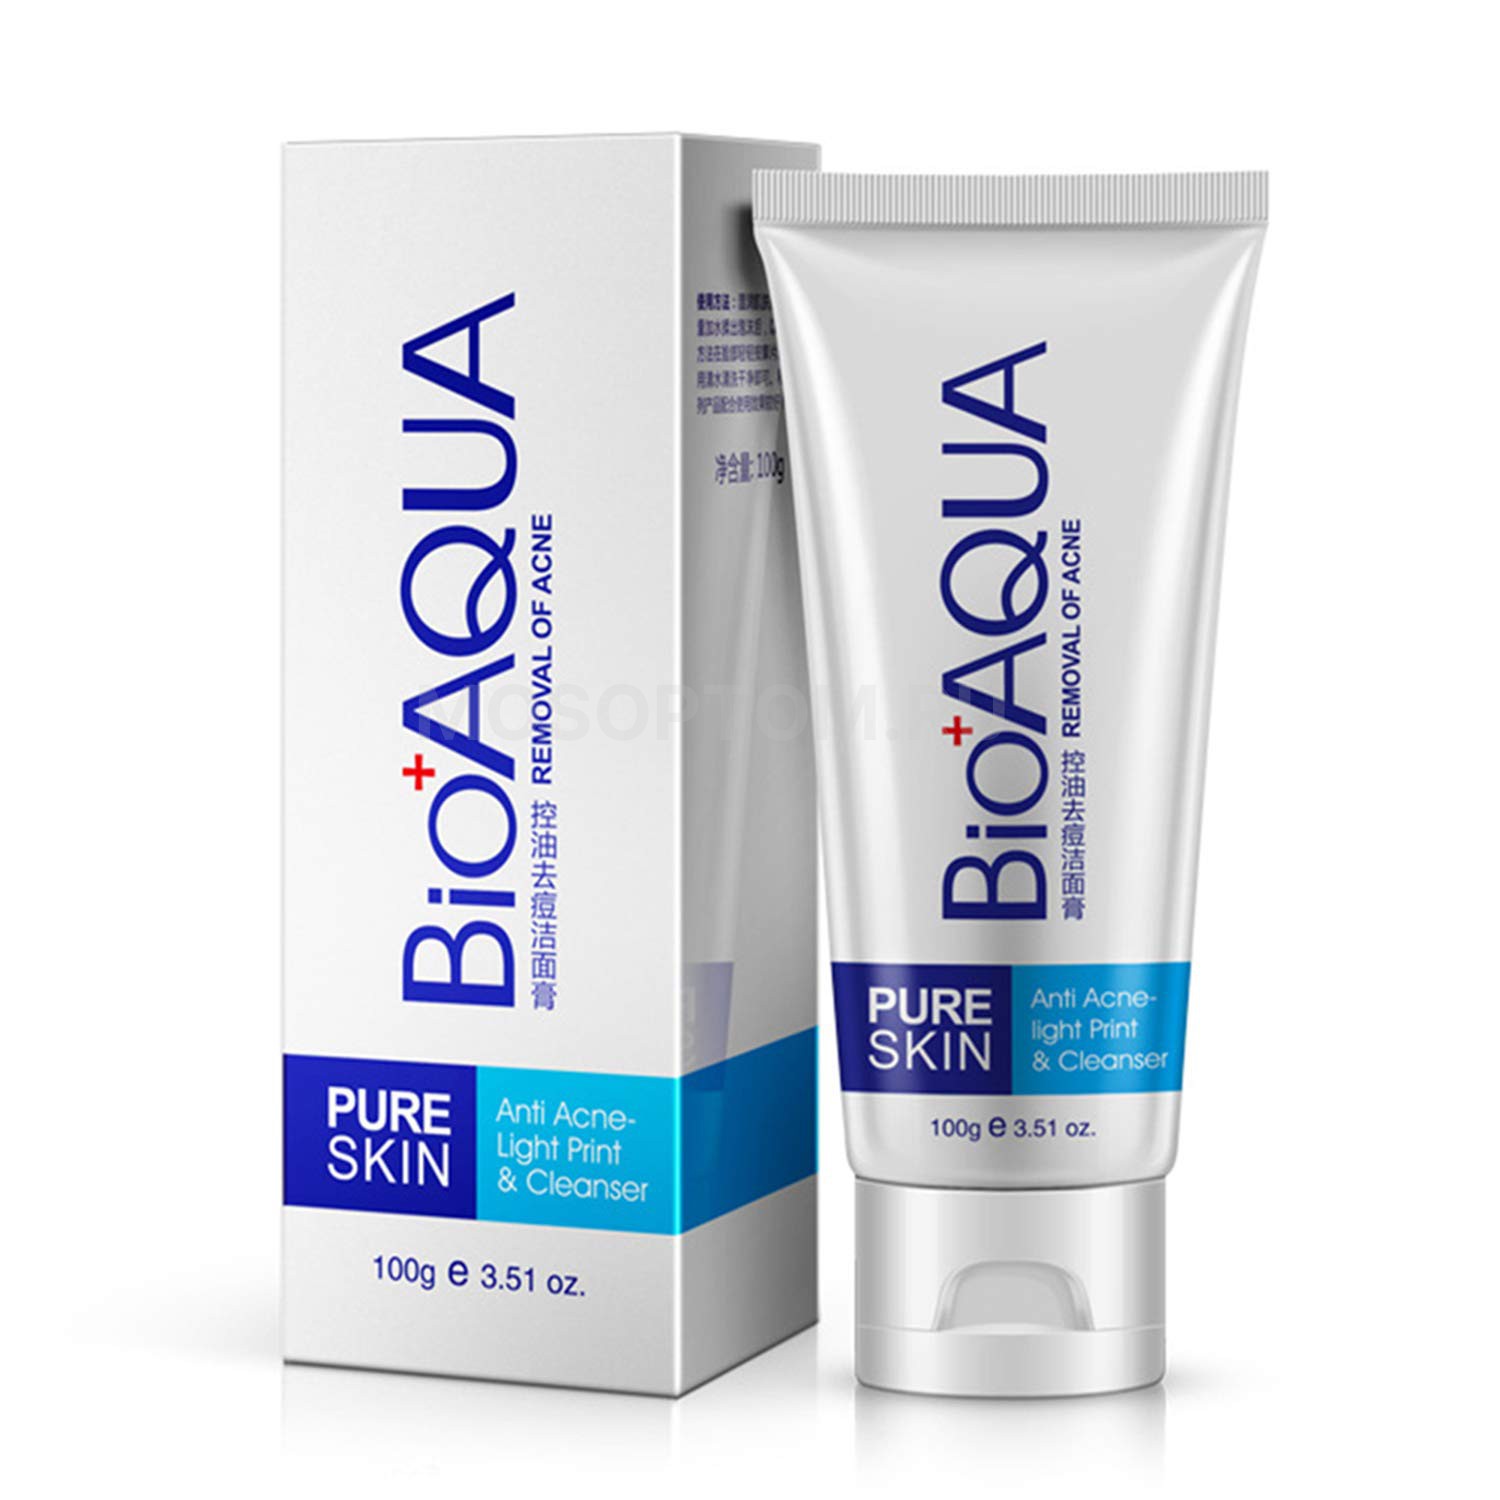 Пенка для умывания Bioaqua Pure Skin Anti Acne-Light Print & Cleanser 100г оптом